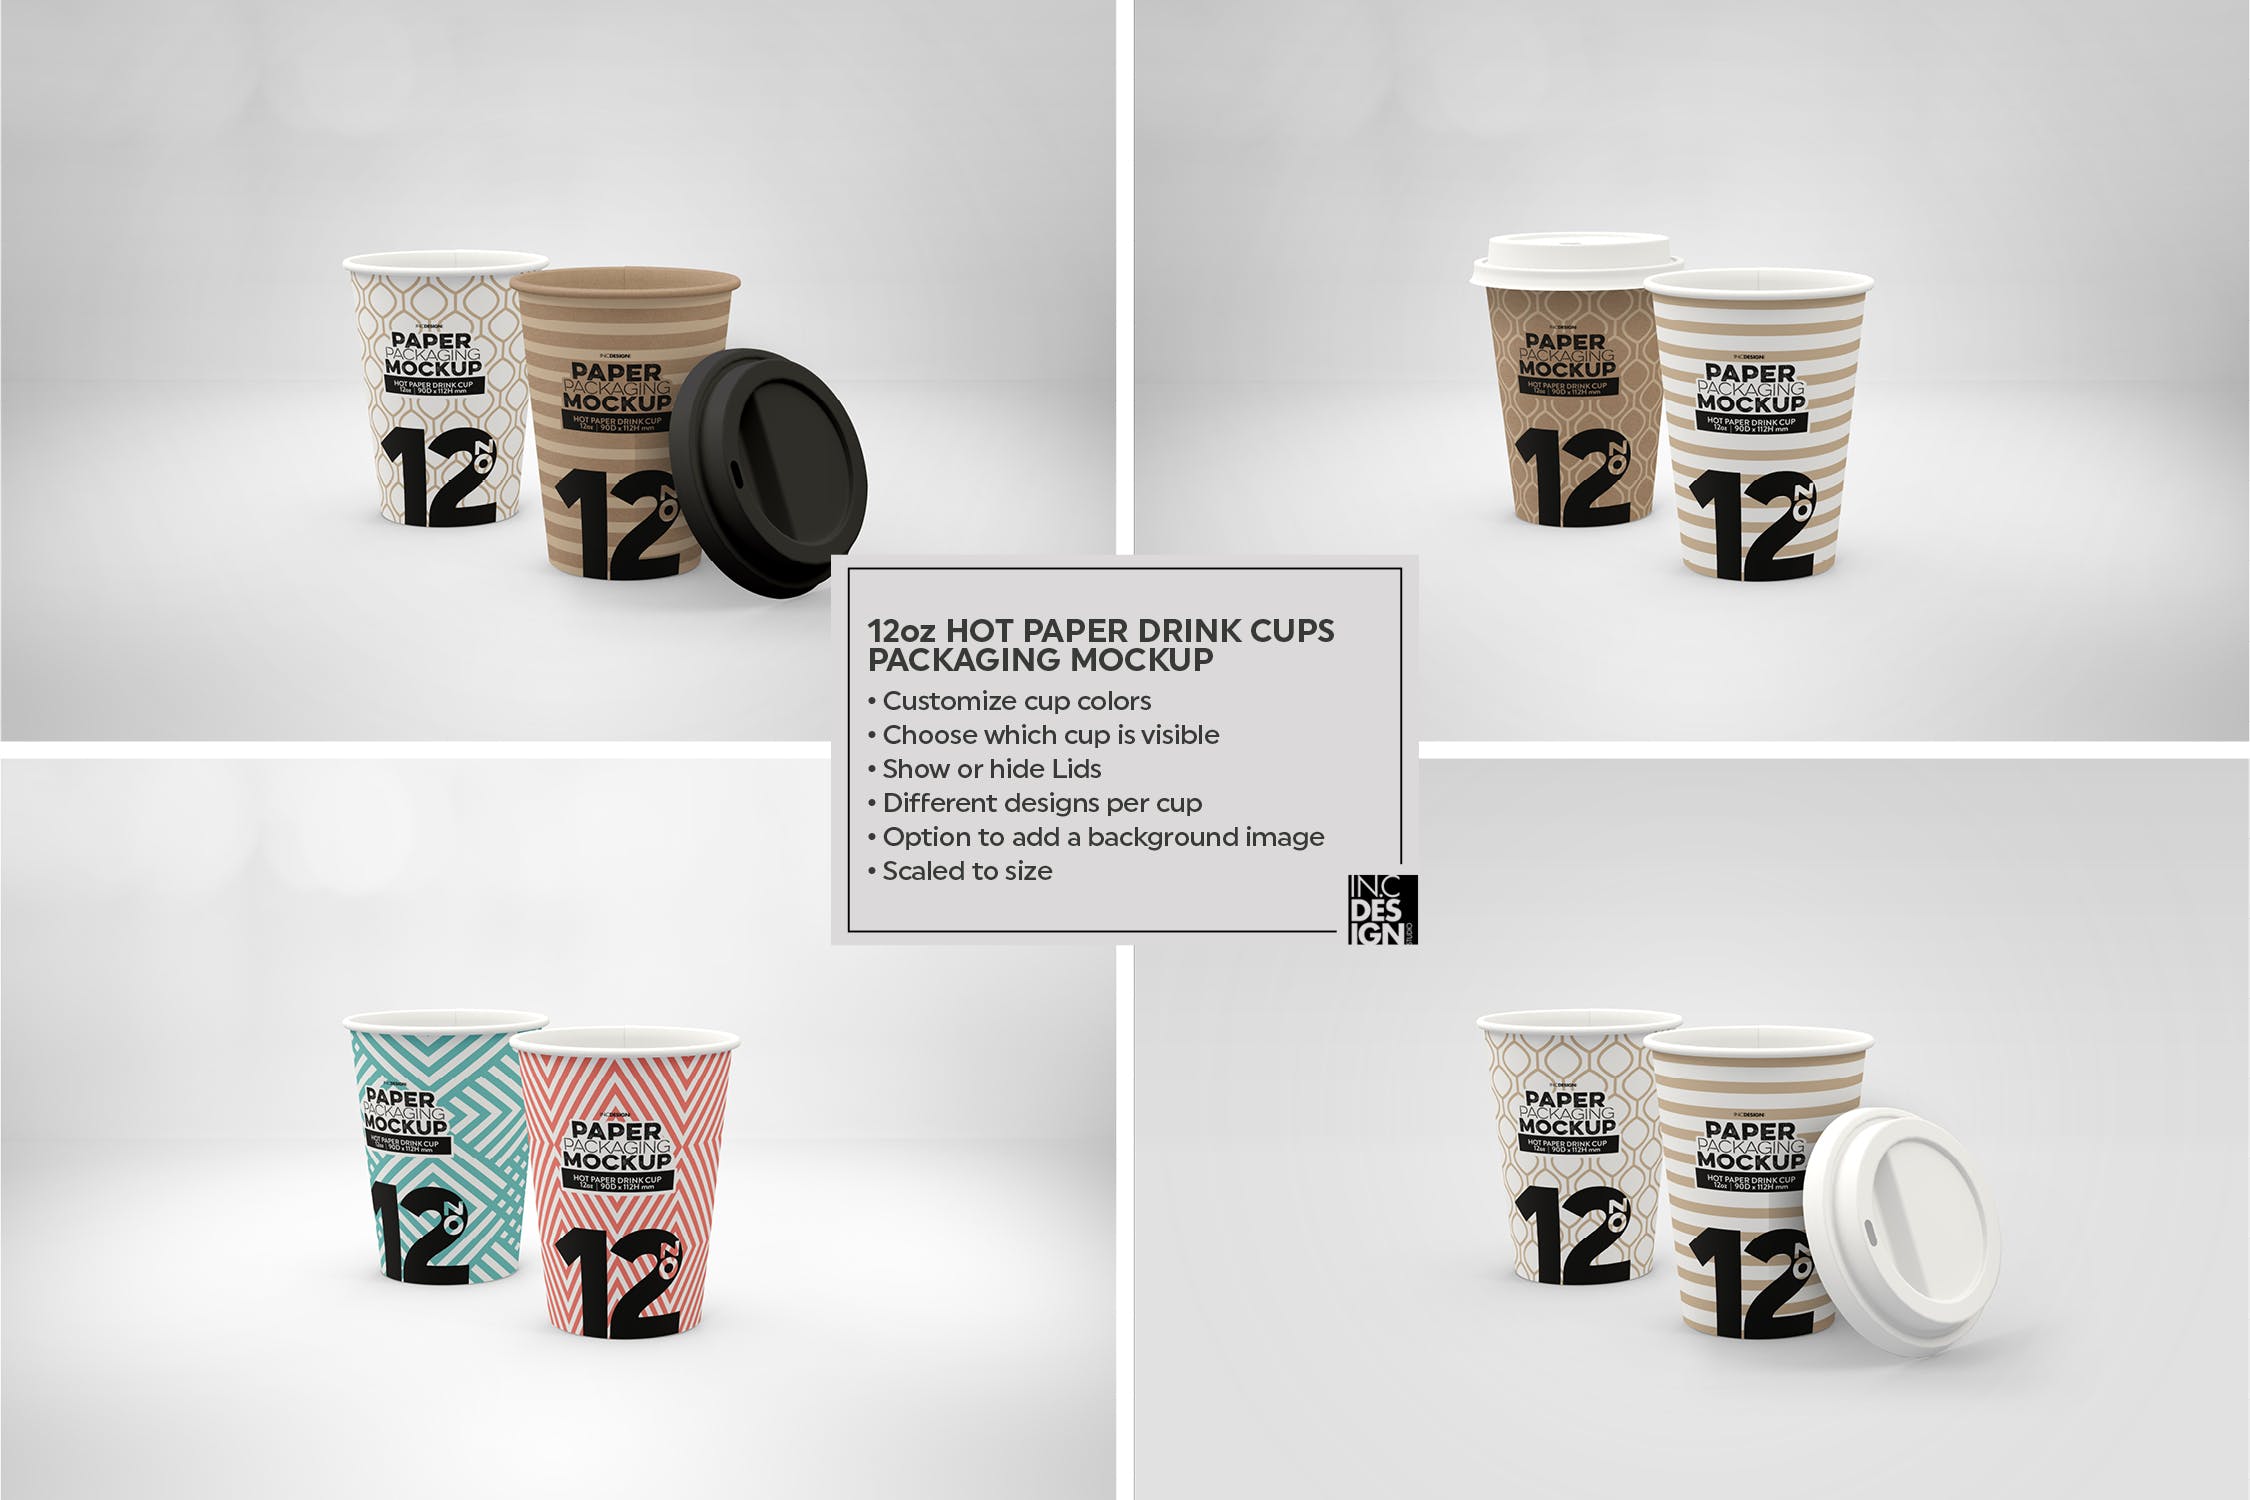 热饮一次性纸杯外观设计16图库精选 Paper Hot Drink Cups Packaging Mockup插图(11)